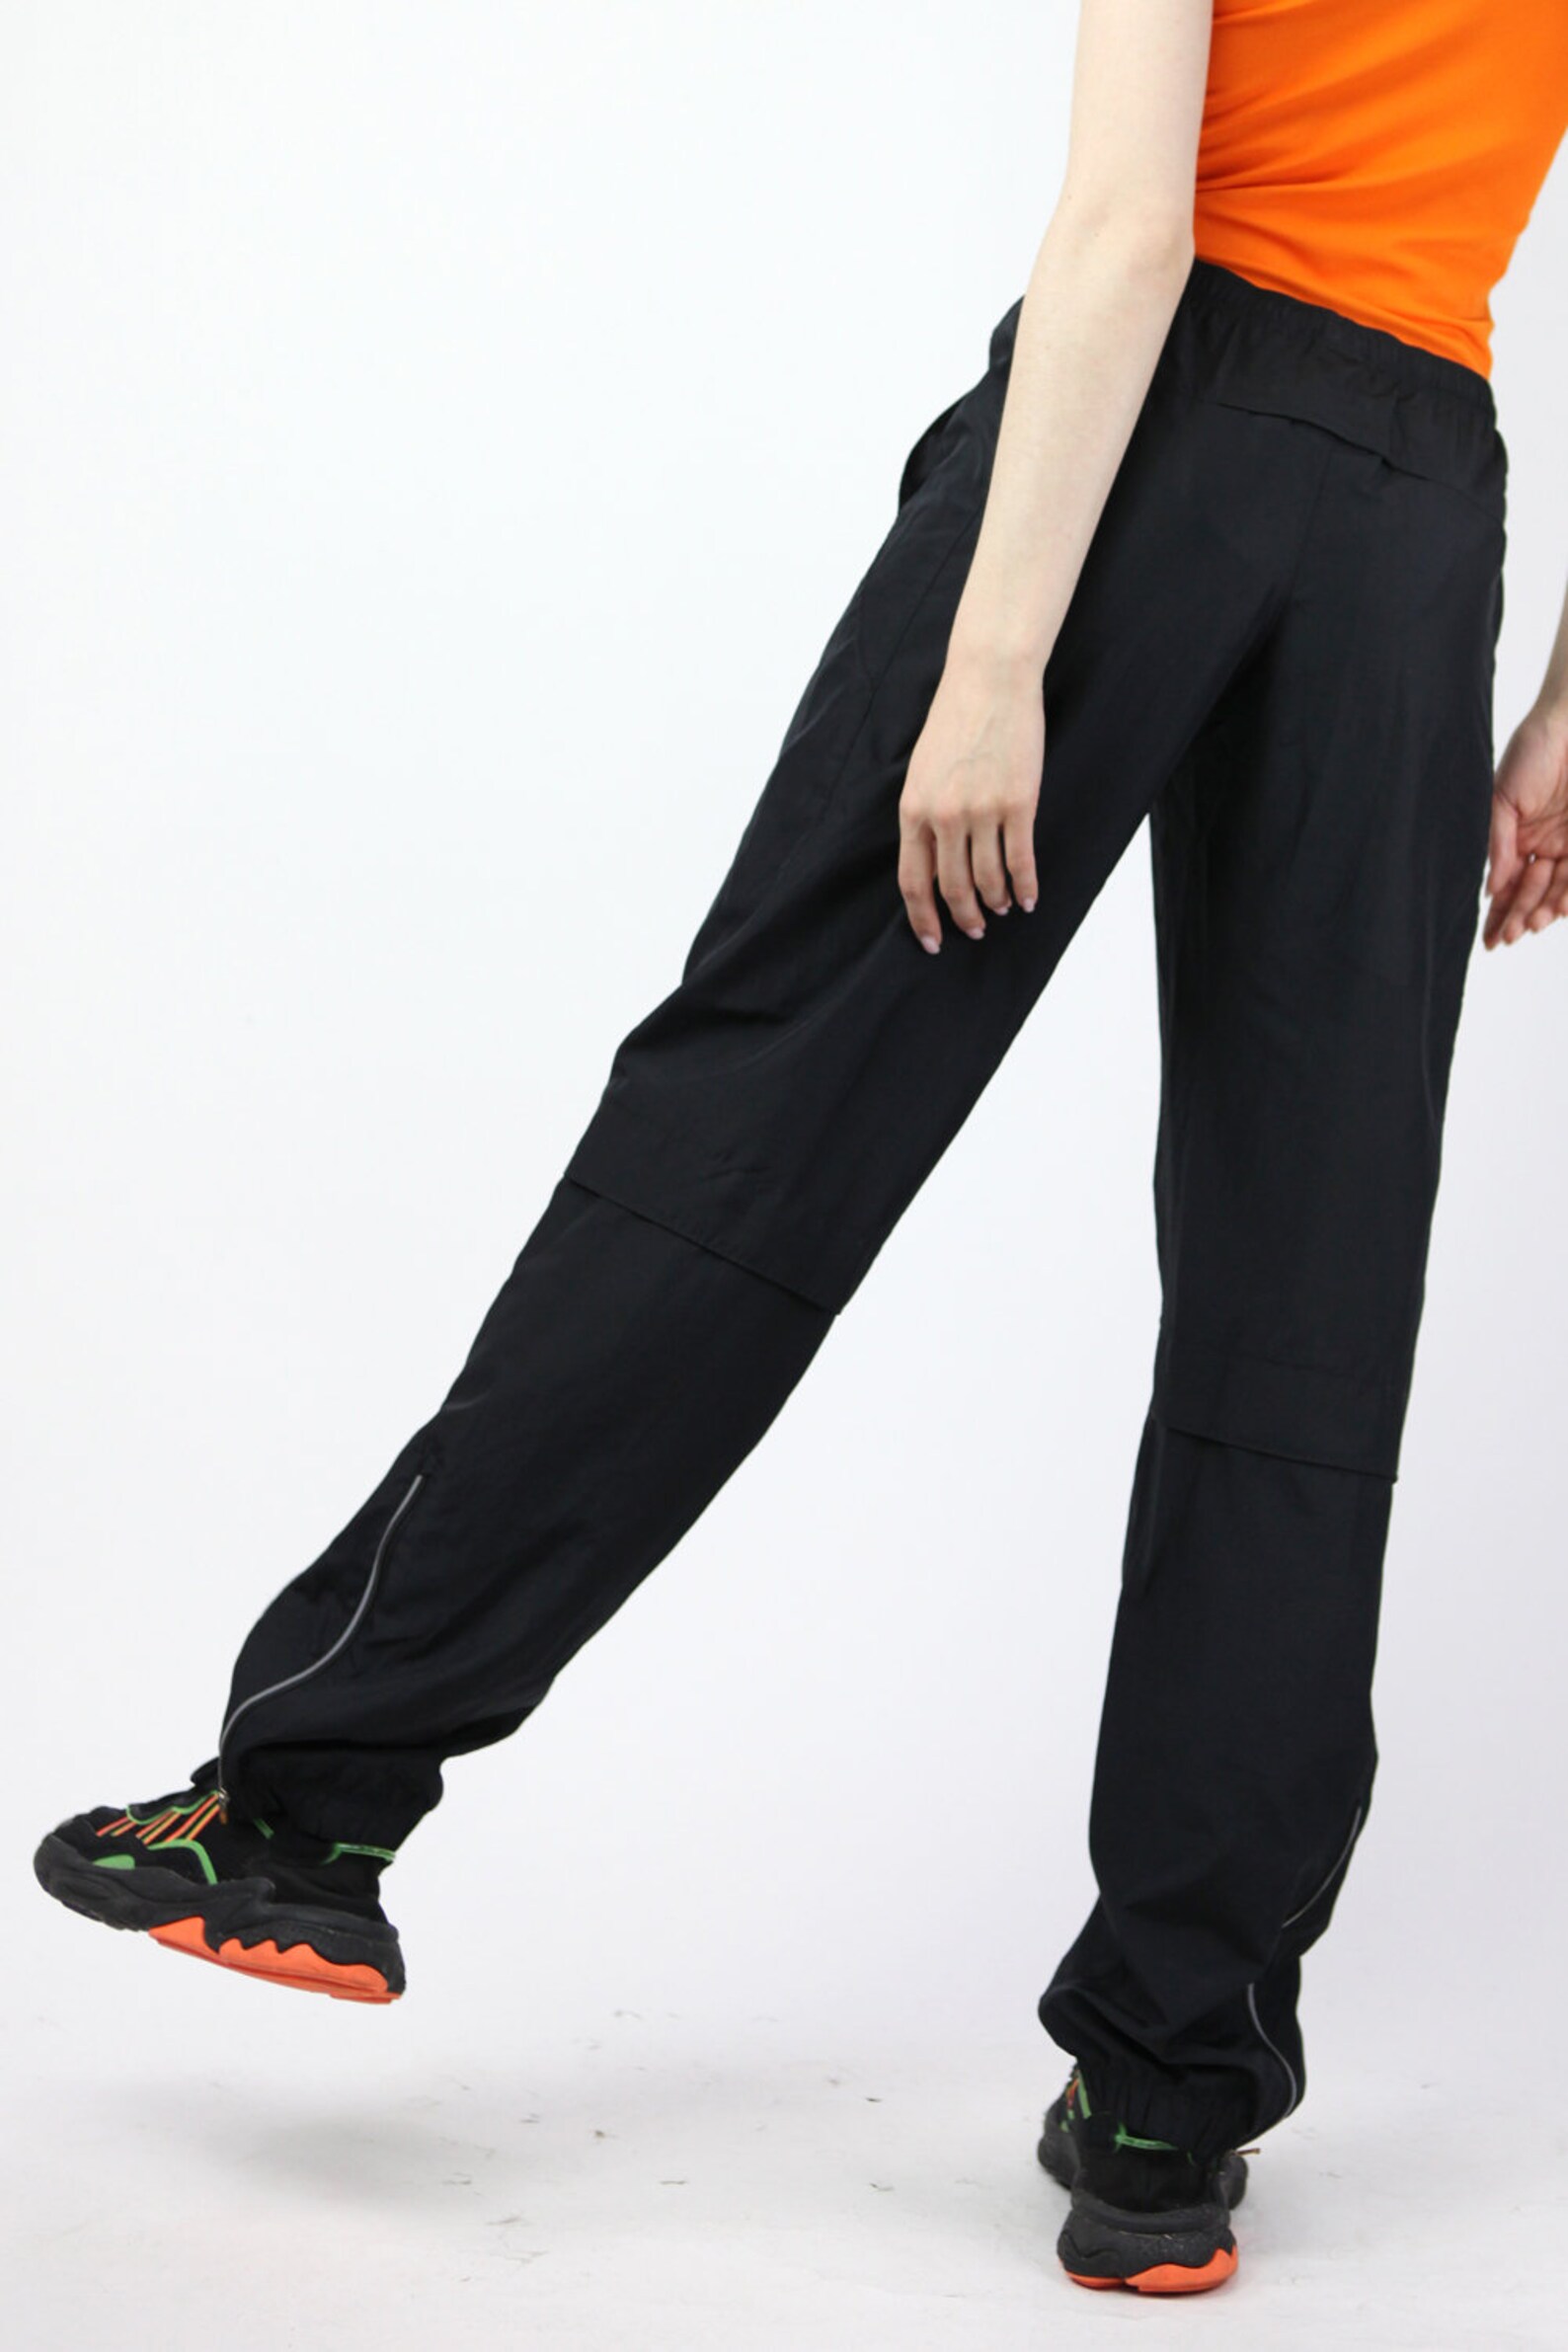 Y2K Nike Joggers Sports Pants in Black size XS | Etsy